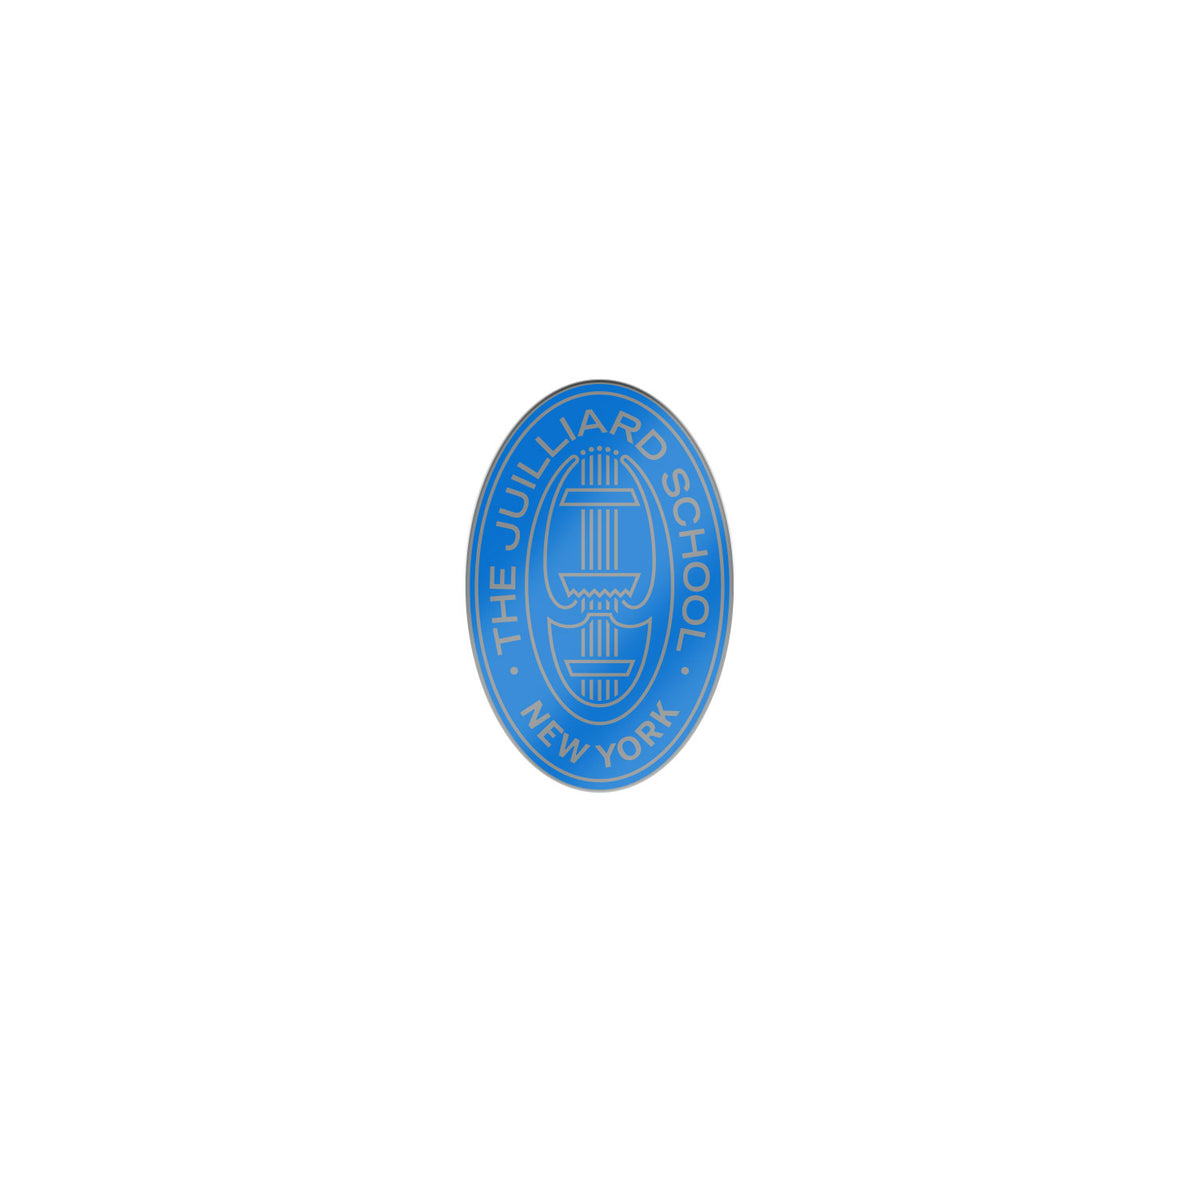 Pin: Juilliard Seal Lapel Pin